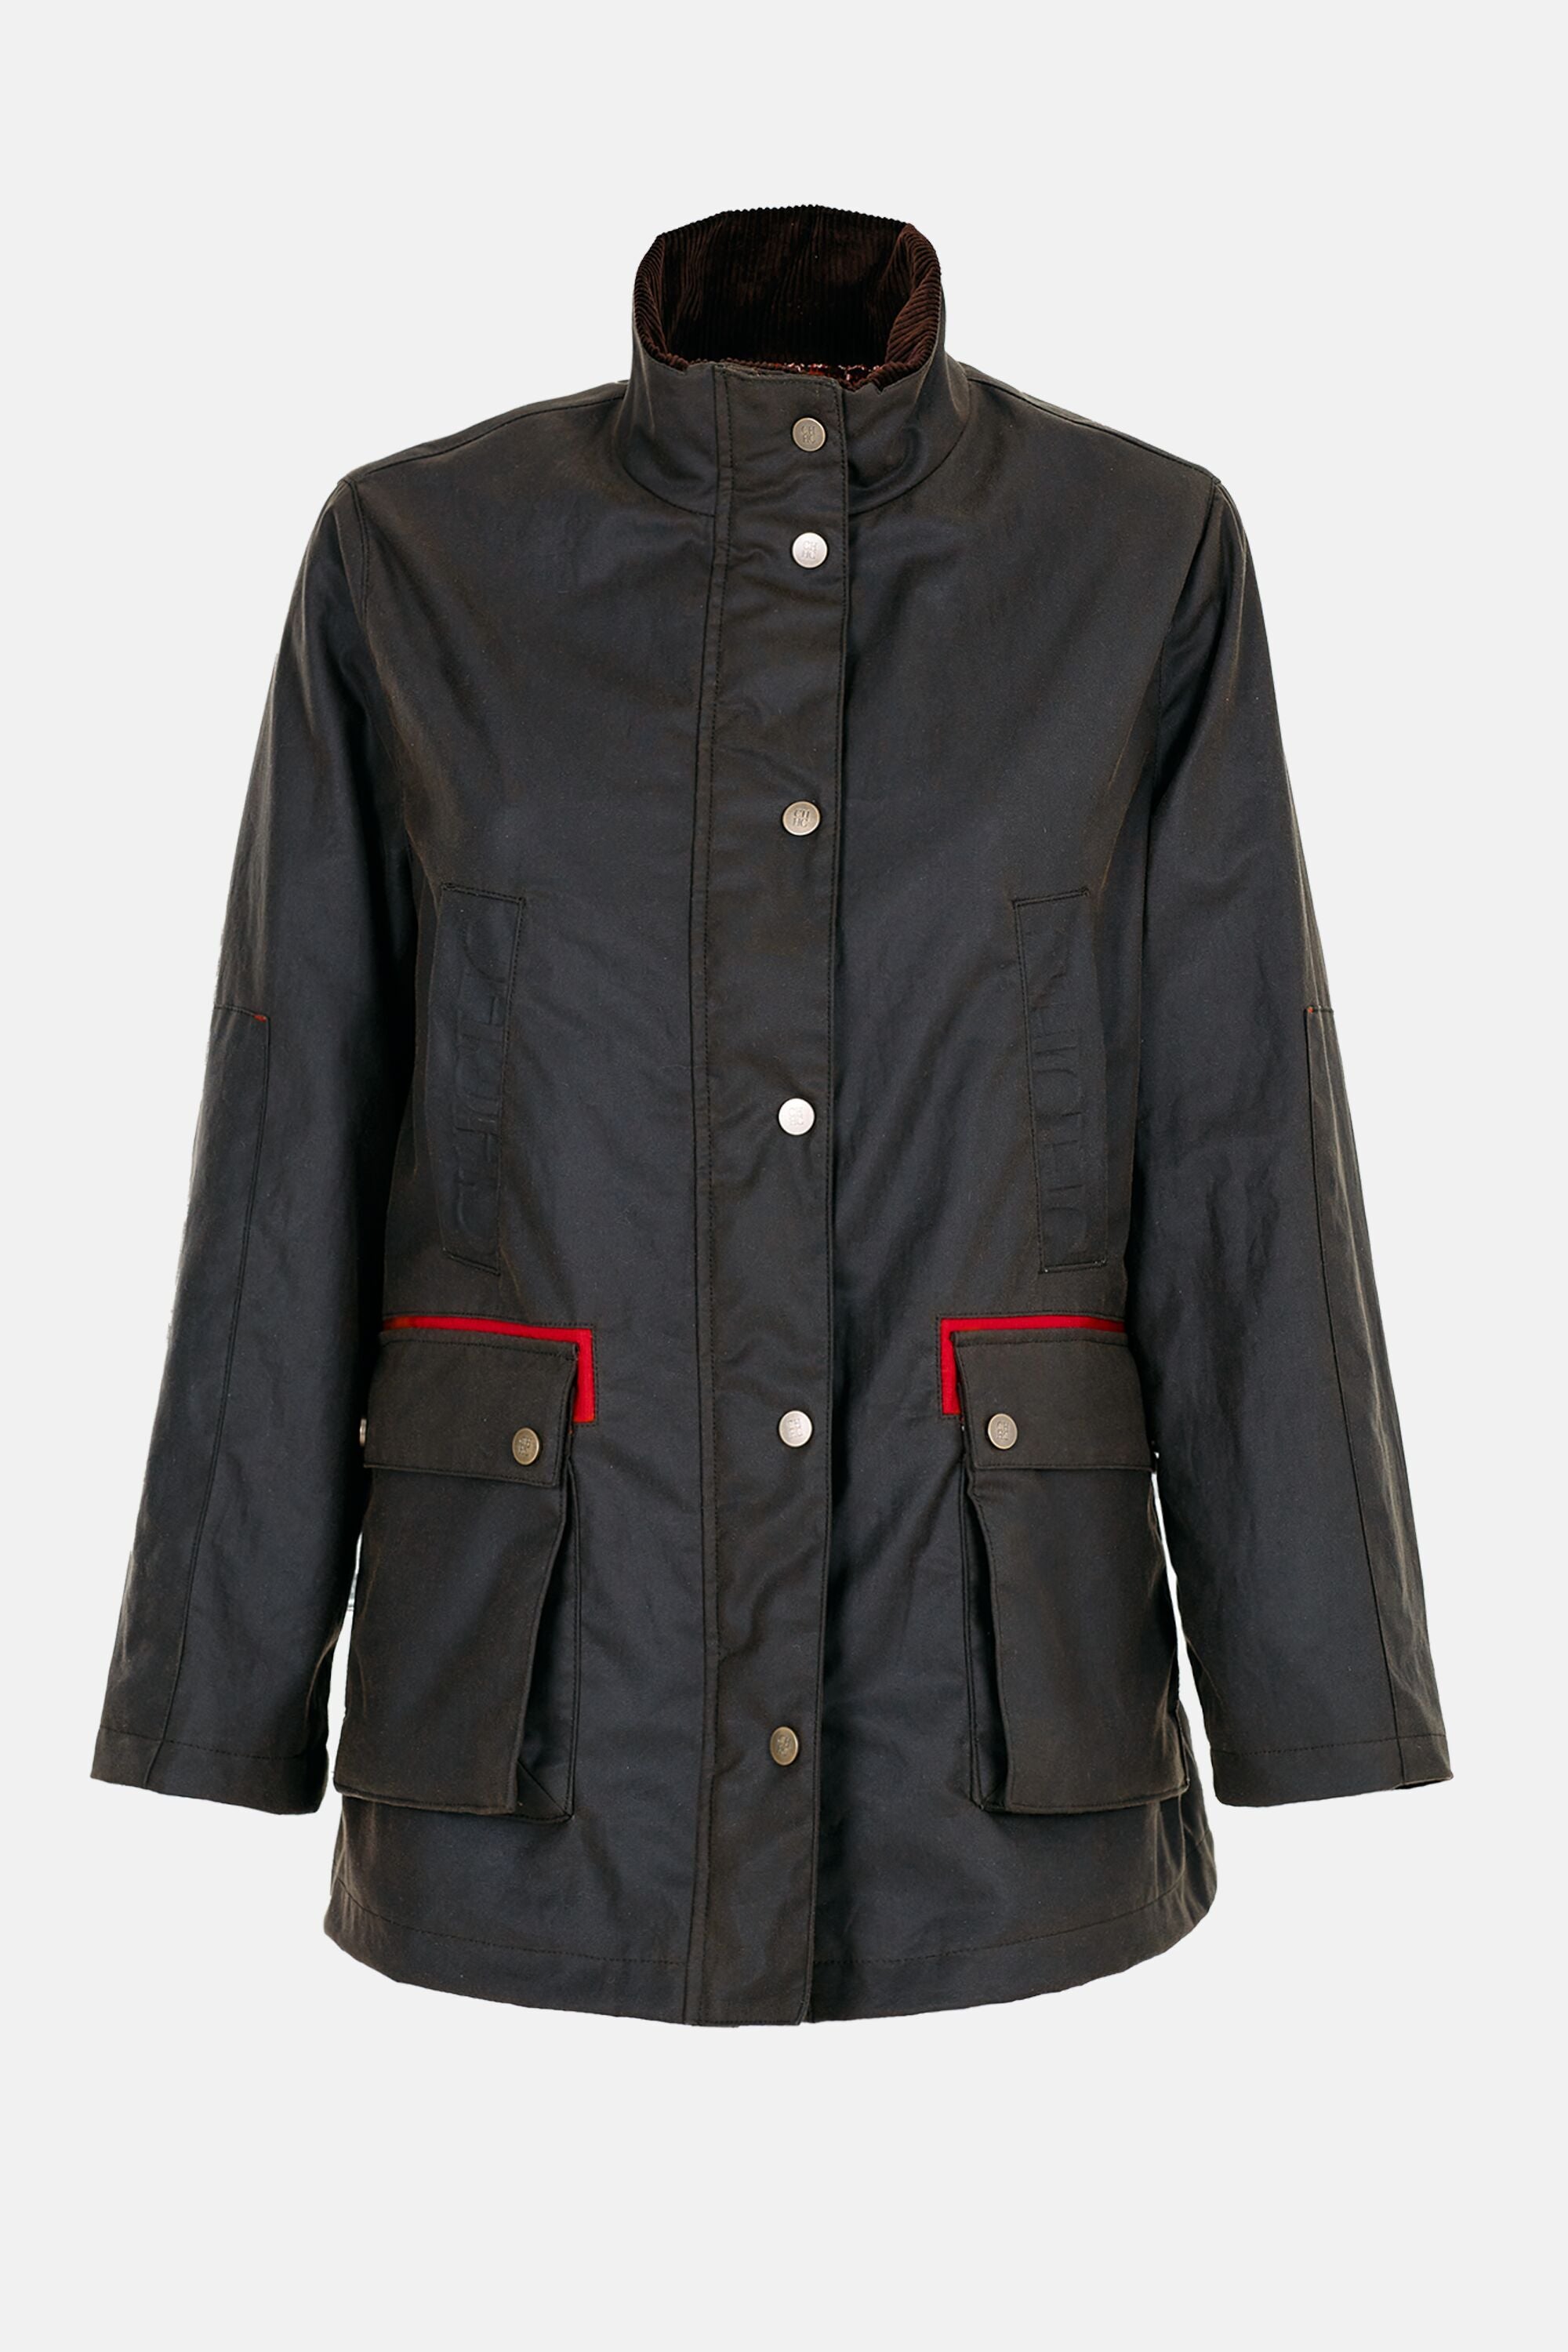 TheShaili Stretchable Cotton Jacket for Women | Full Sleeves | Zipper